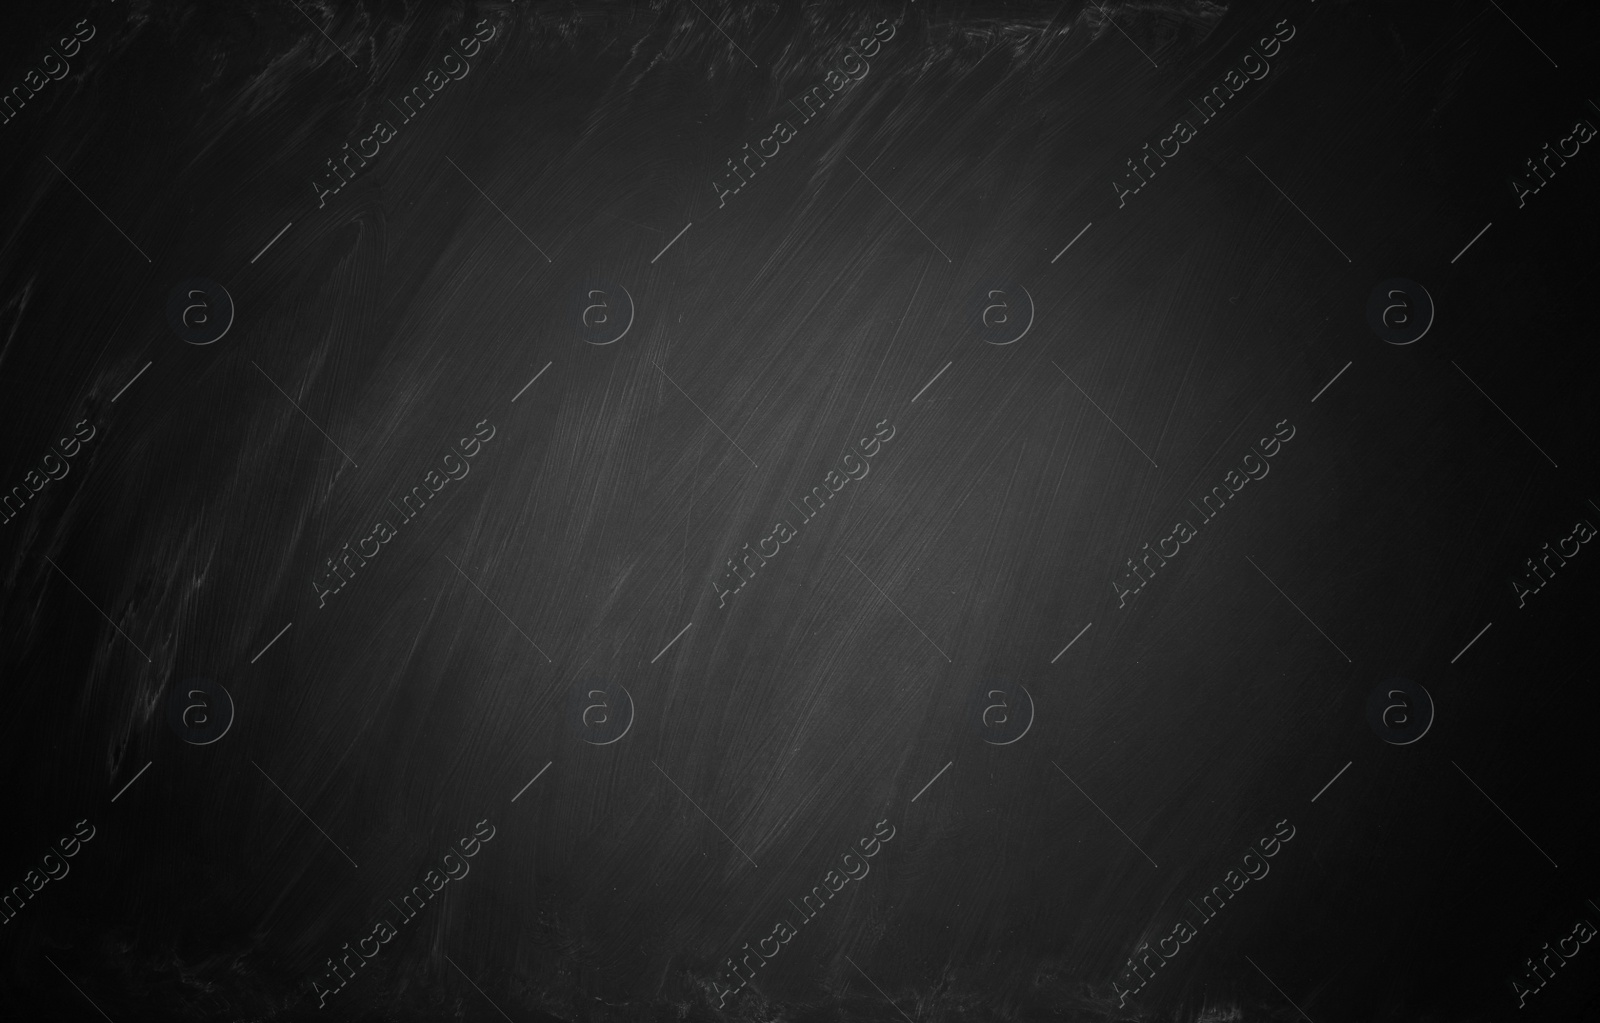 Image of Dirty black chalkboard as background. Vignette effect